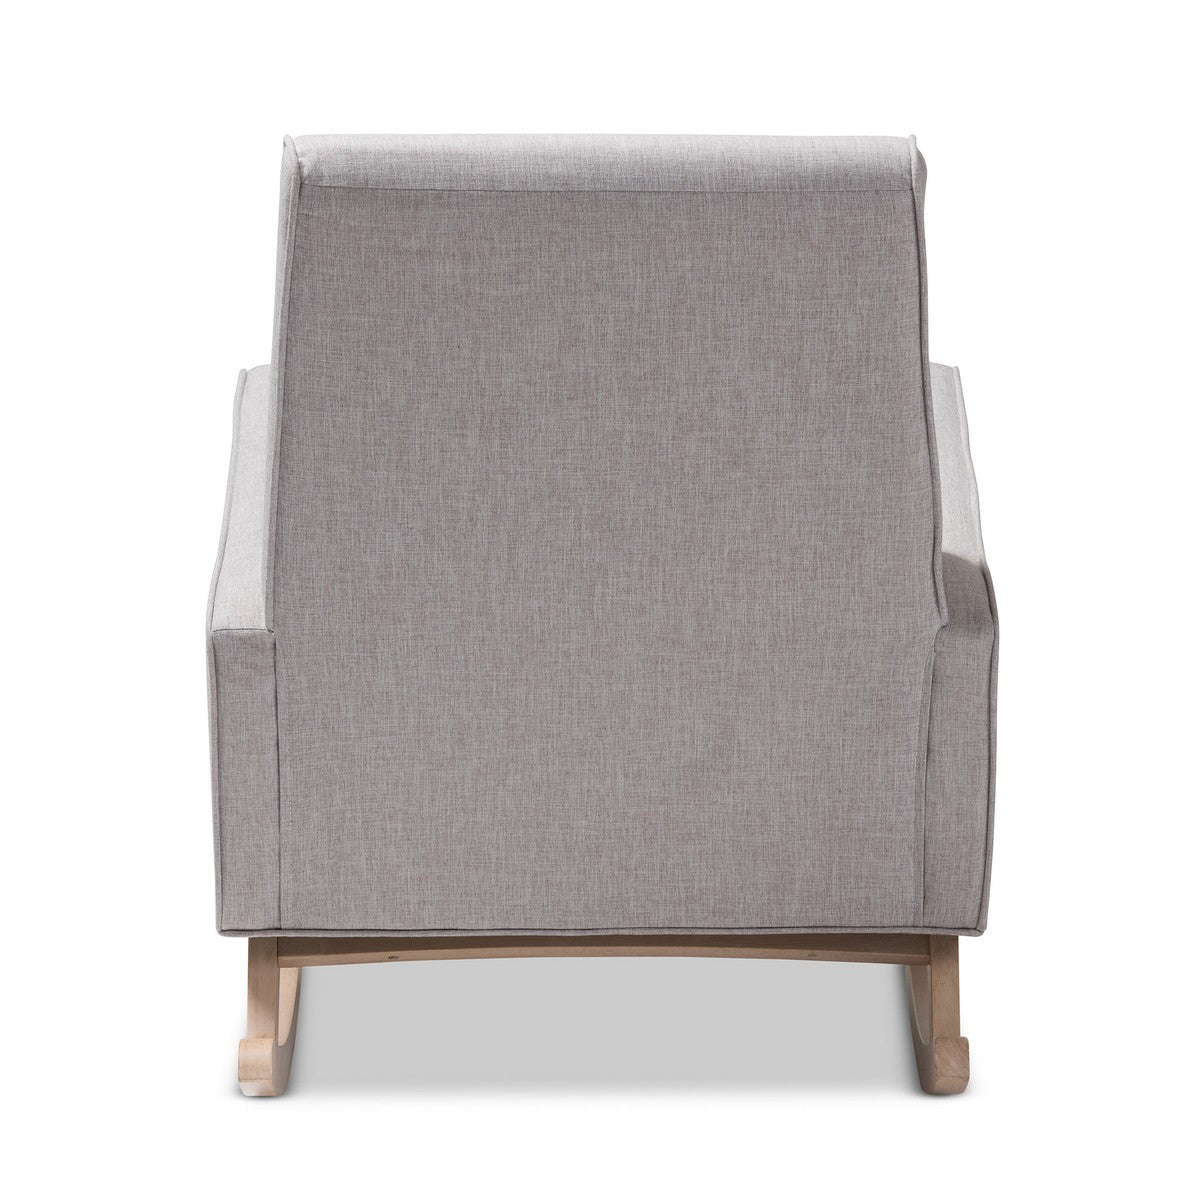 Baxton Studio Marlena Mid-Century Modern Greyish Beige Fabric Upholstered Whitewash Wood Rocking Chair